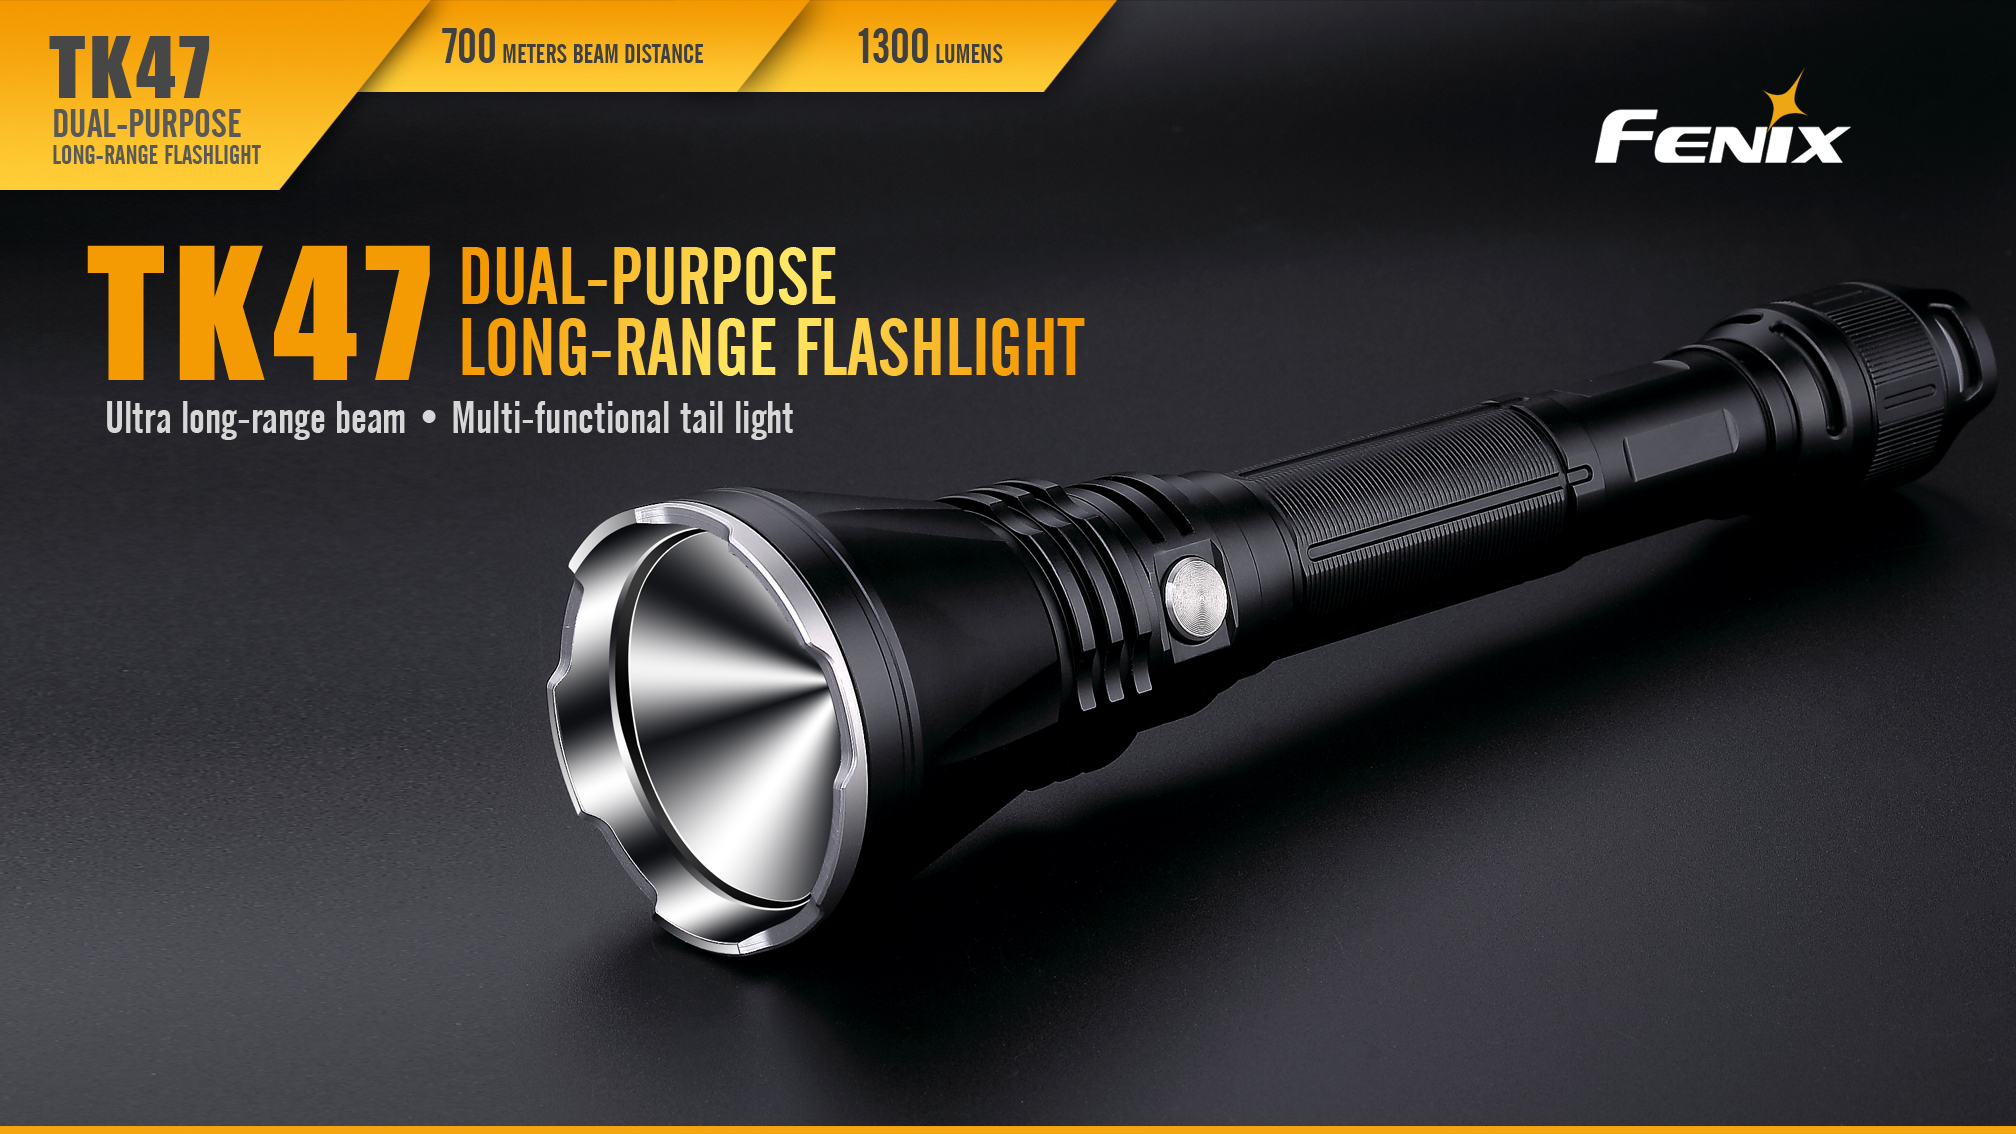 Fenix TK47 Dual-Purpose LED Flashlight Overview